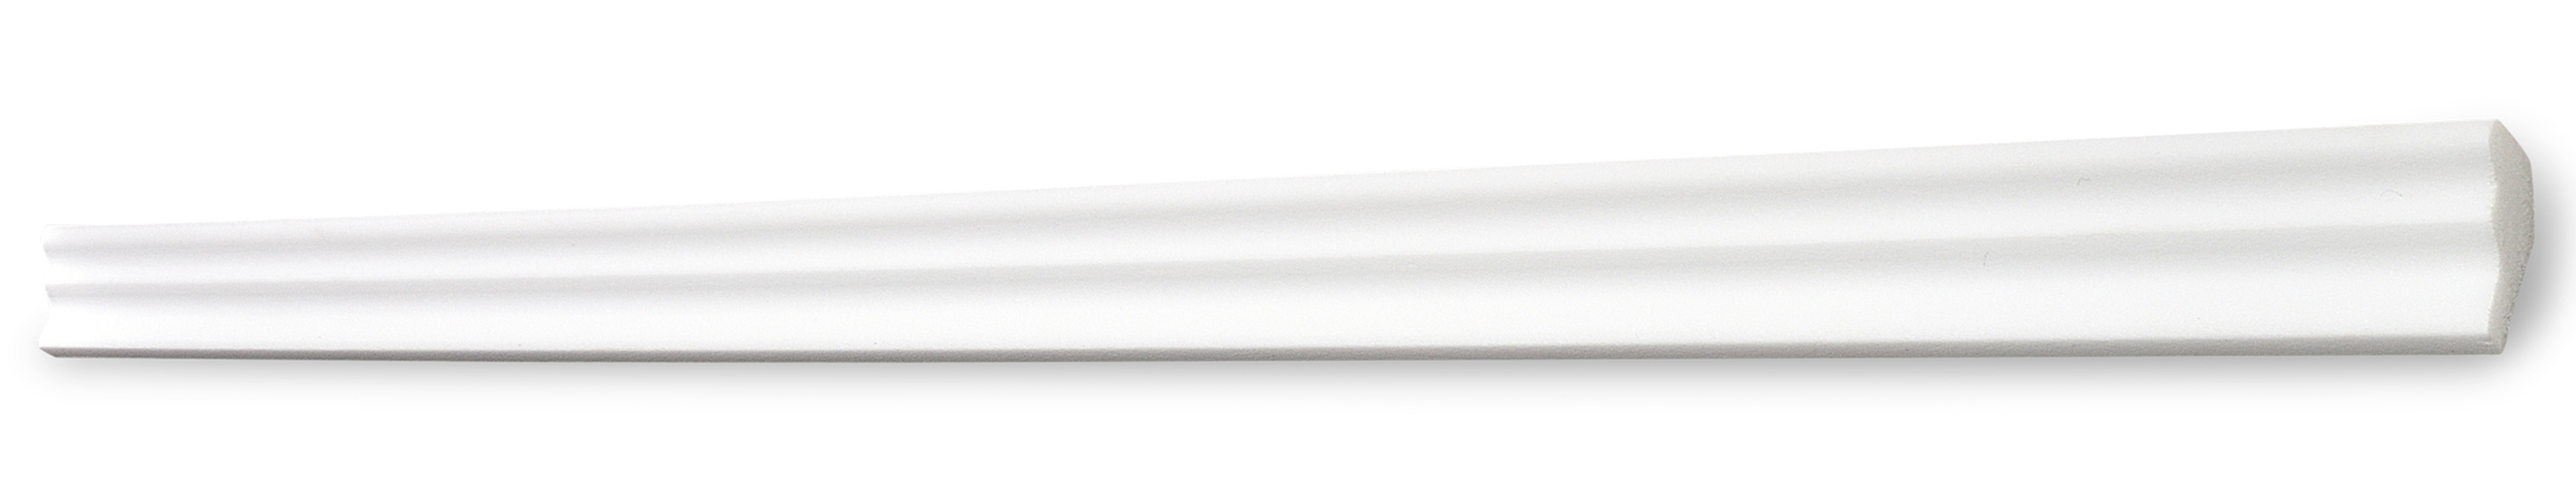 DECOSA Moulure E25 - polystyrène - blanc - 15 x 25 mm - longueur 2 m